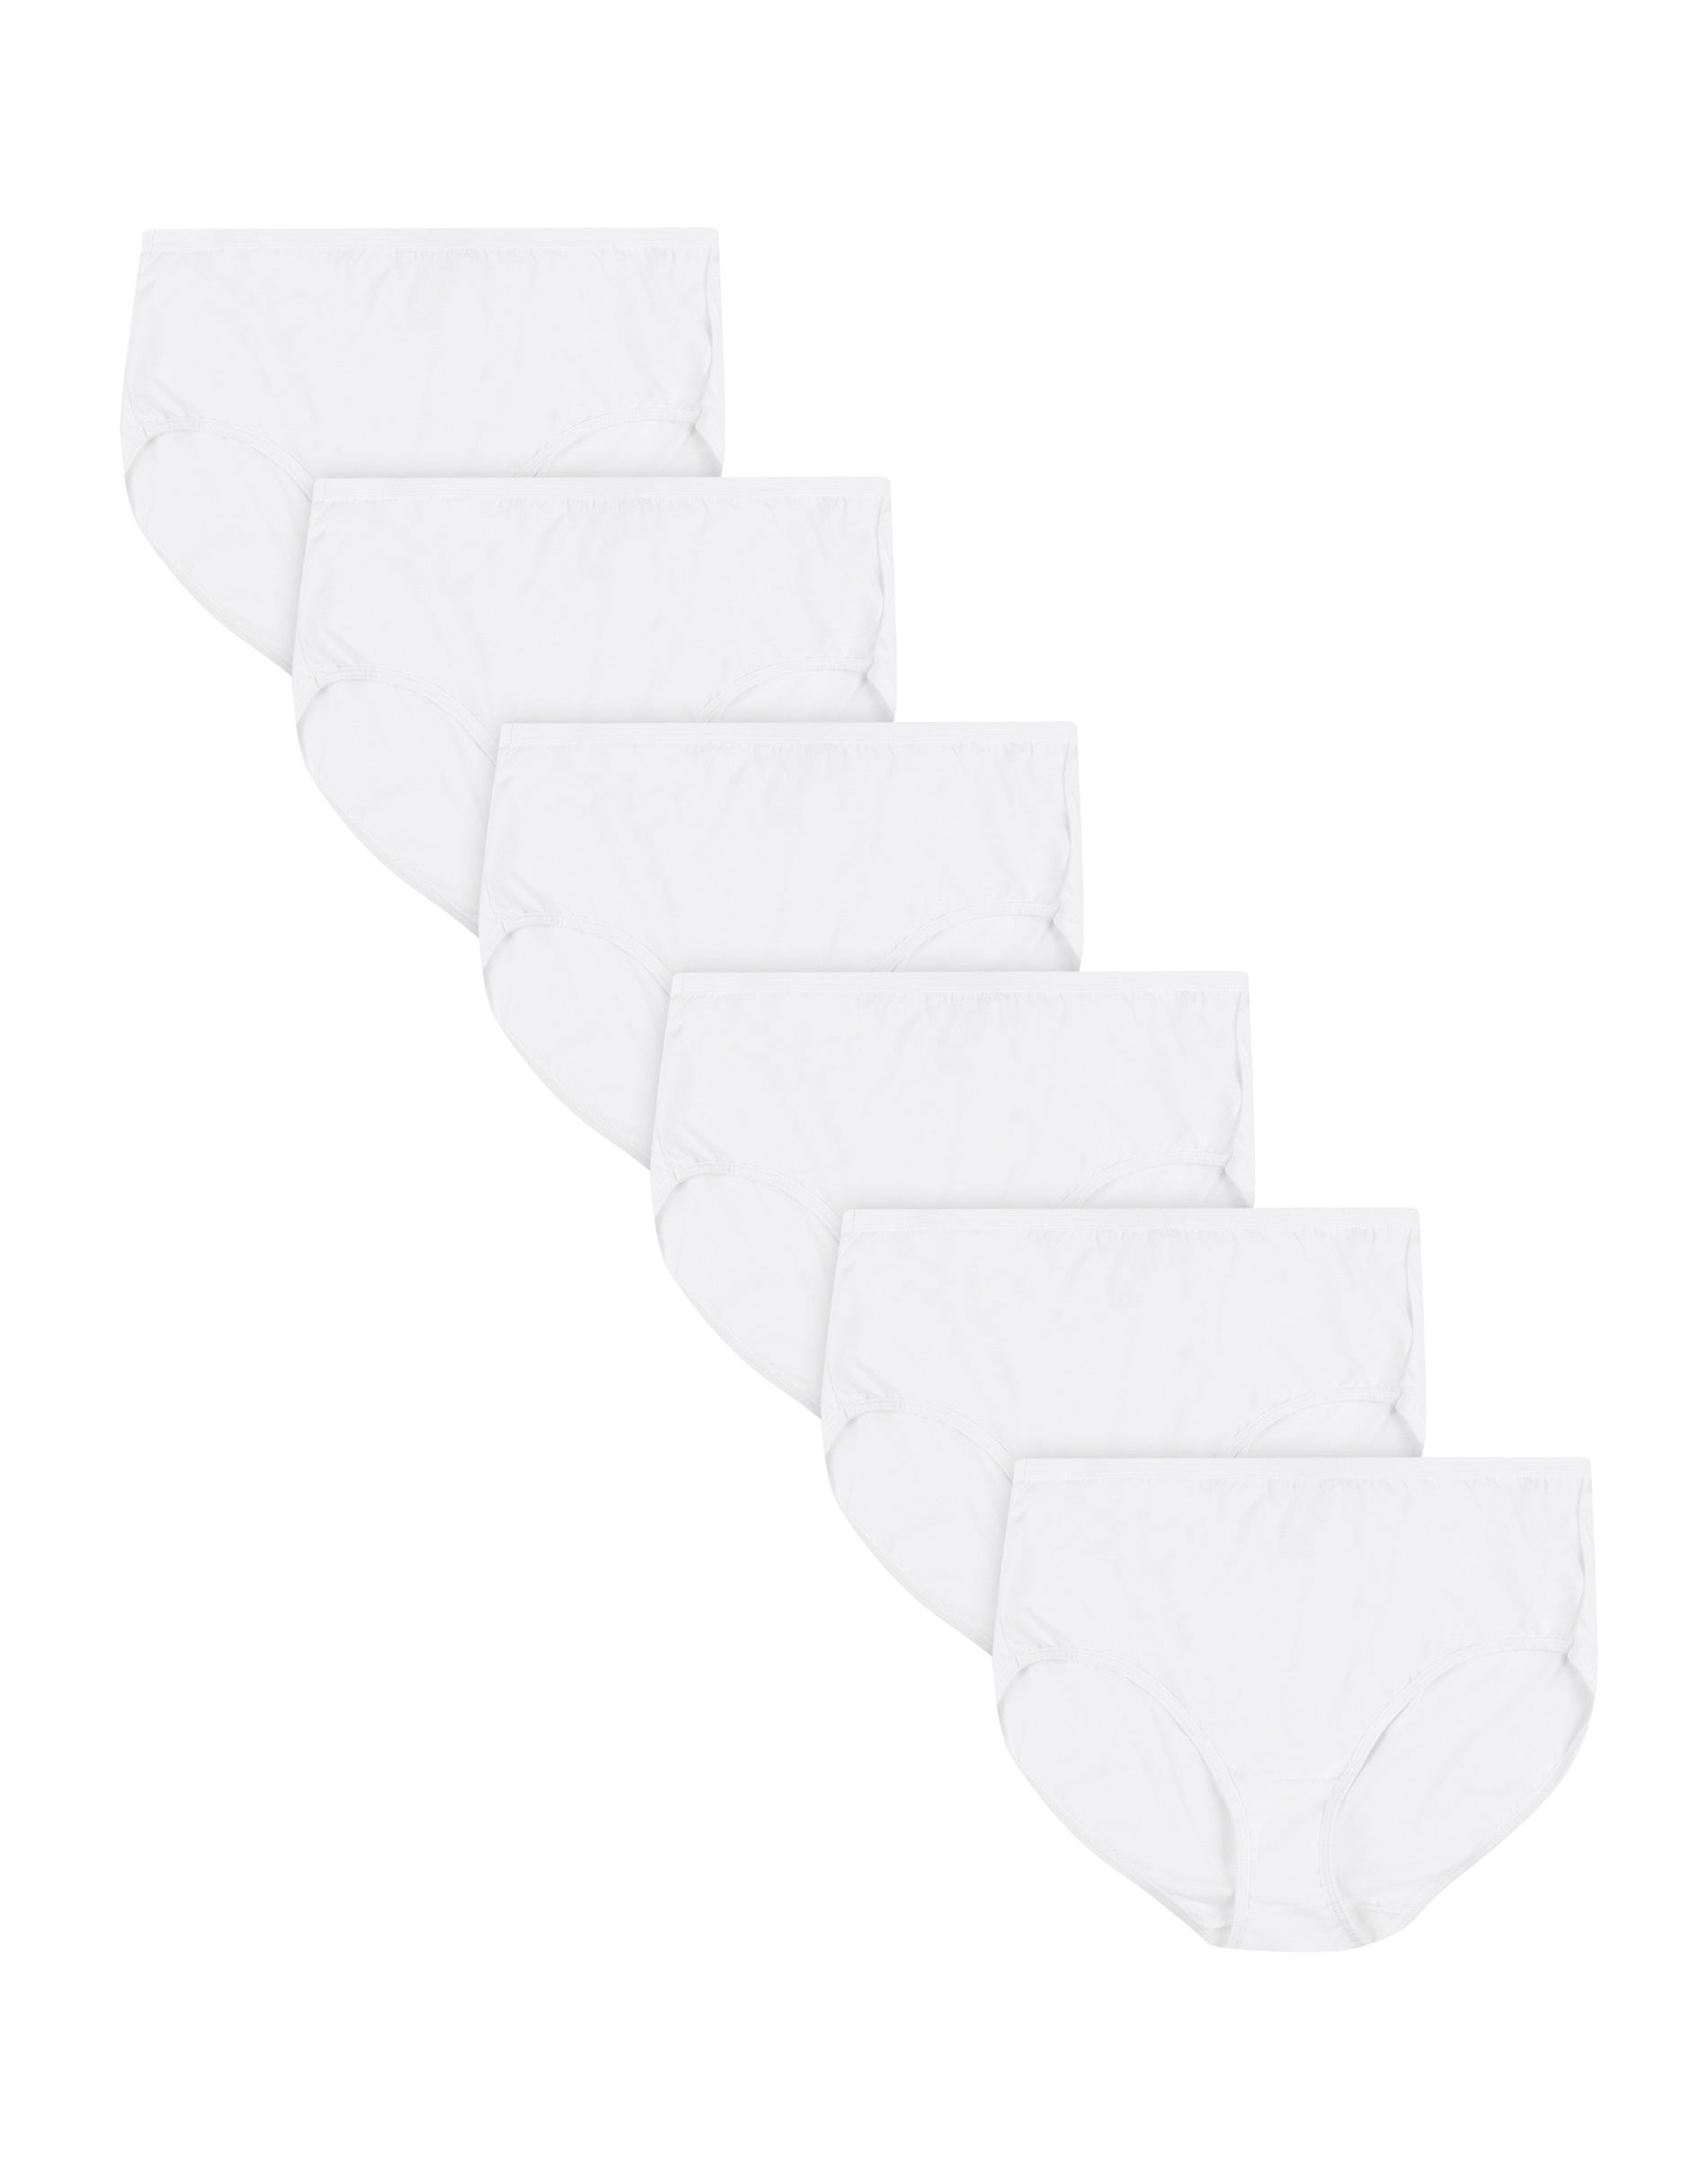 JMS Cotton White Briefs 6-Pack - Apparel Direct Distributor